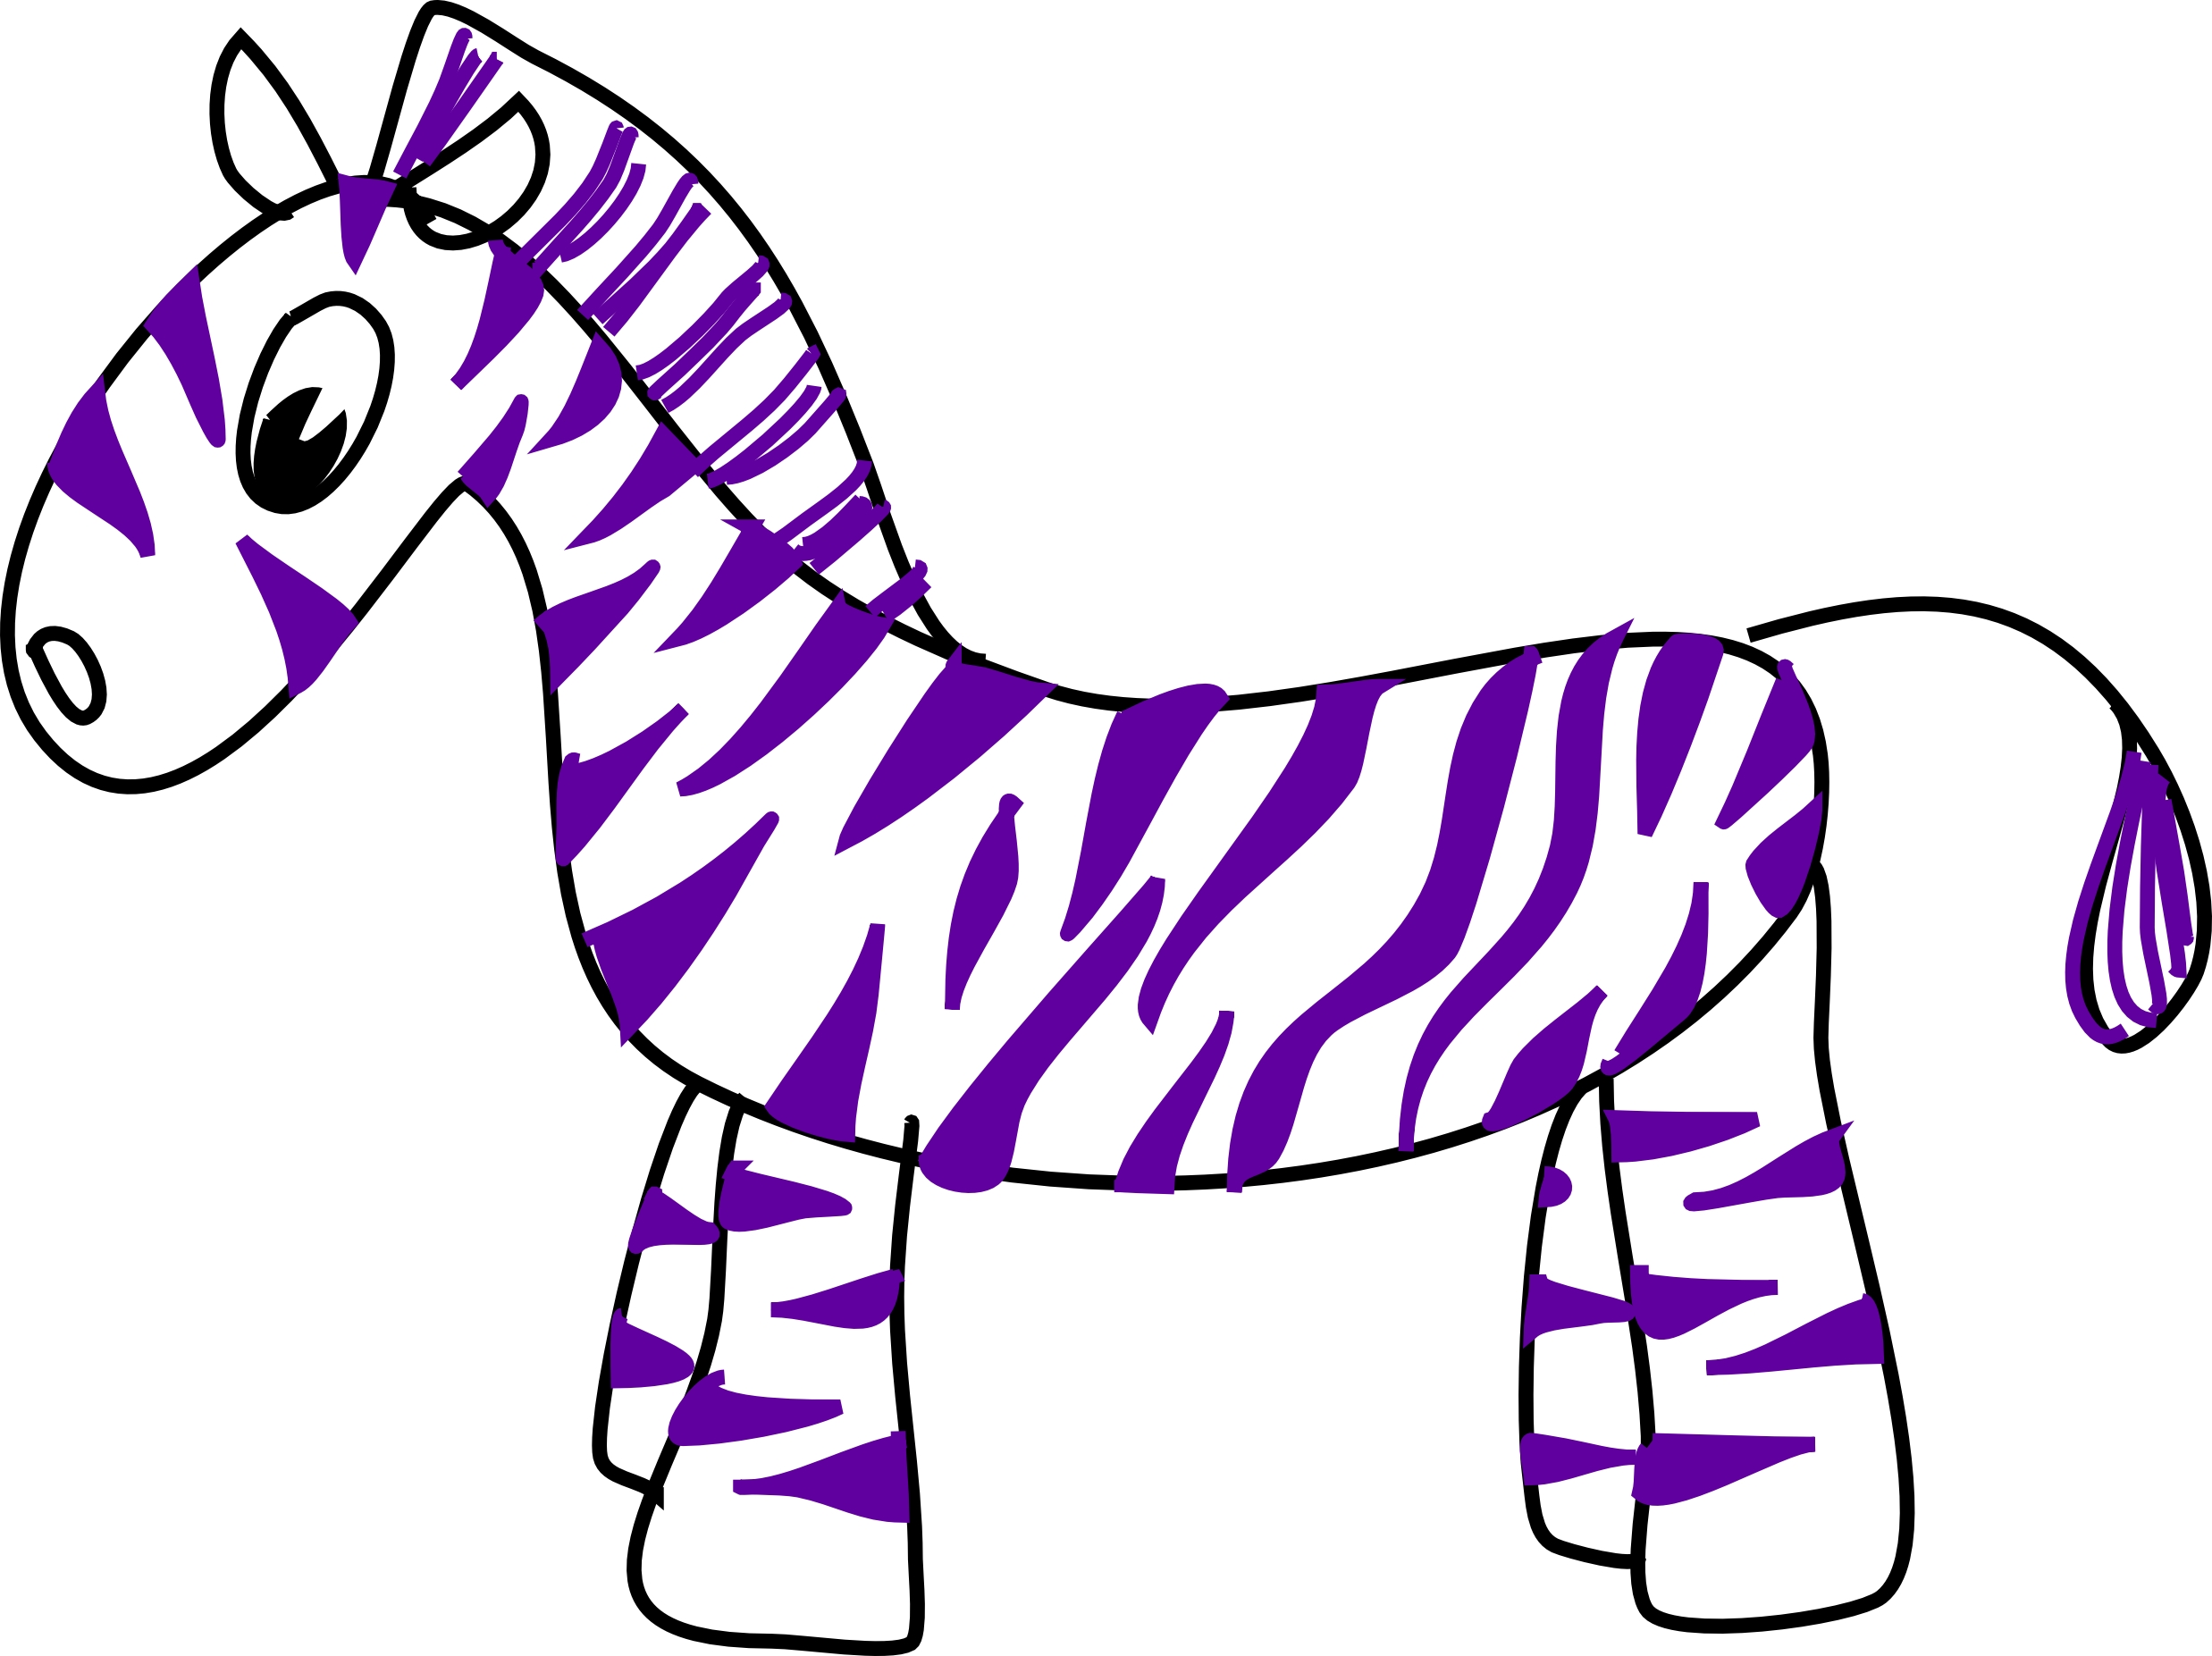 Zebra clipart free image 3